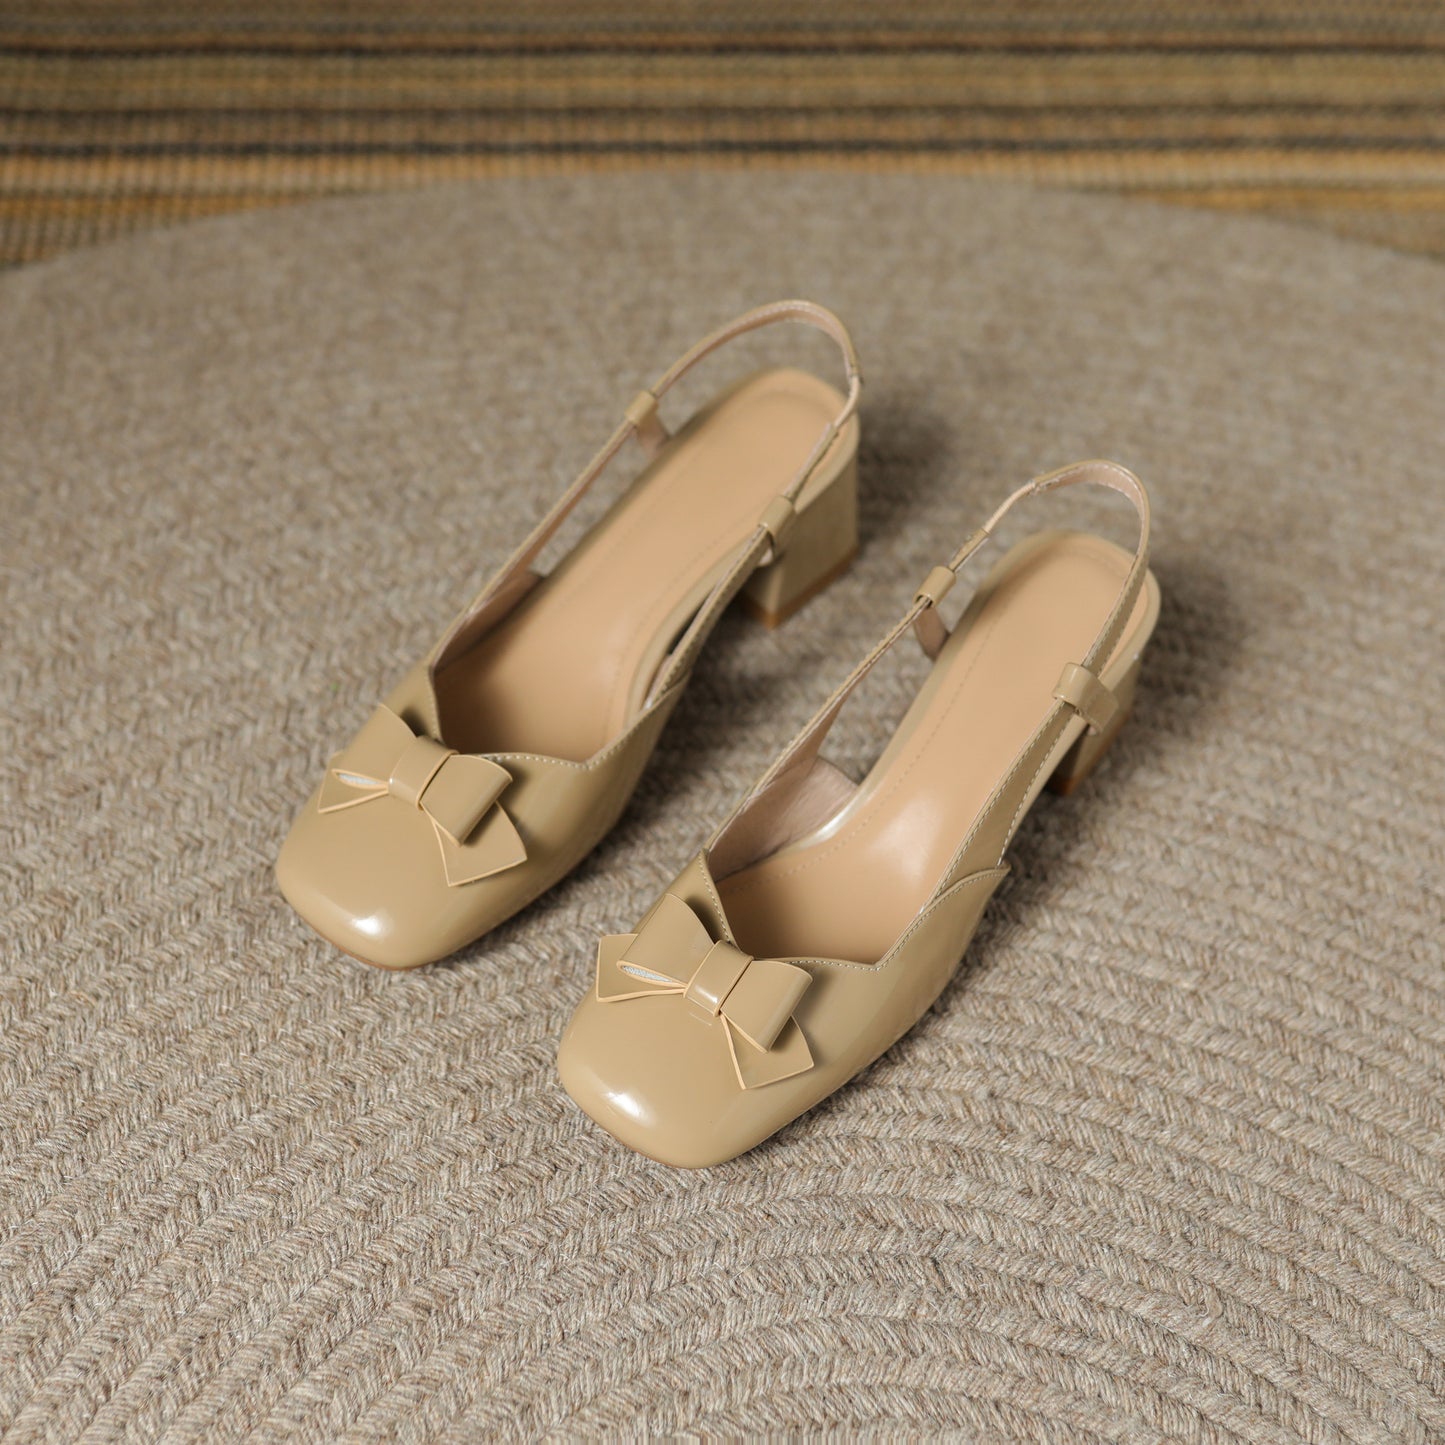 TinaCus Women's Glossy Patent Leather Handmade Block Heel Cute Bowtie Classic Slingback Pumps